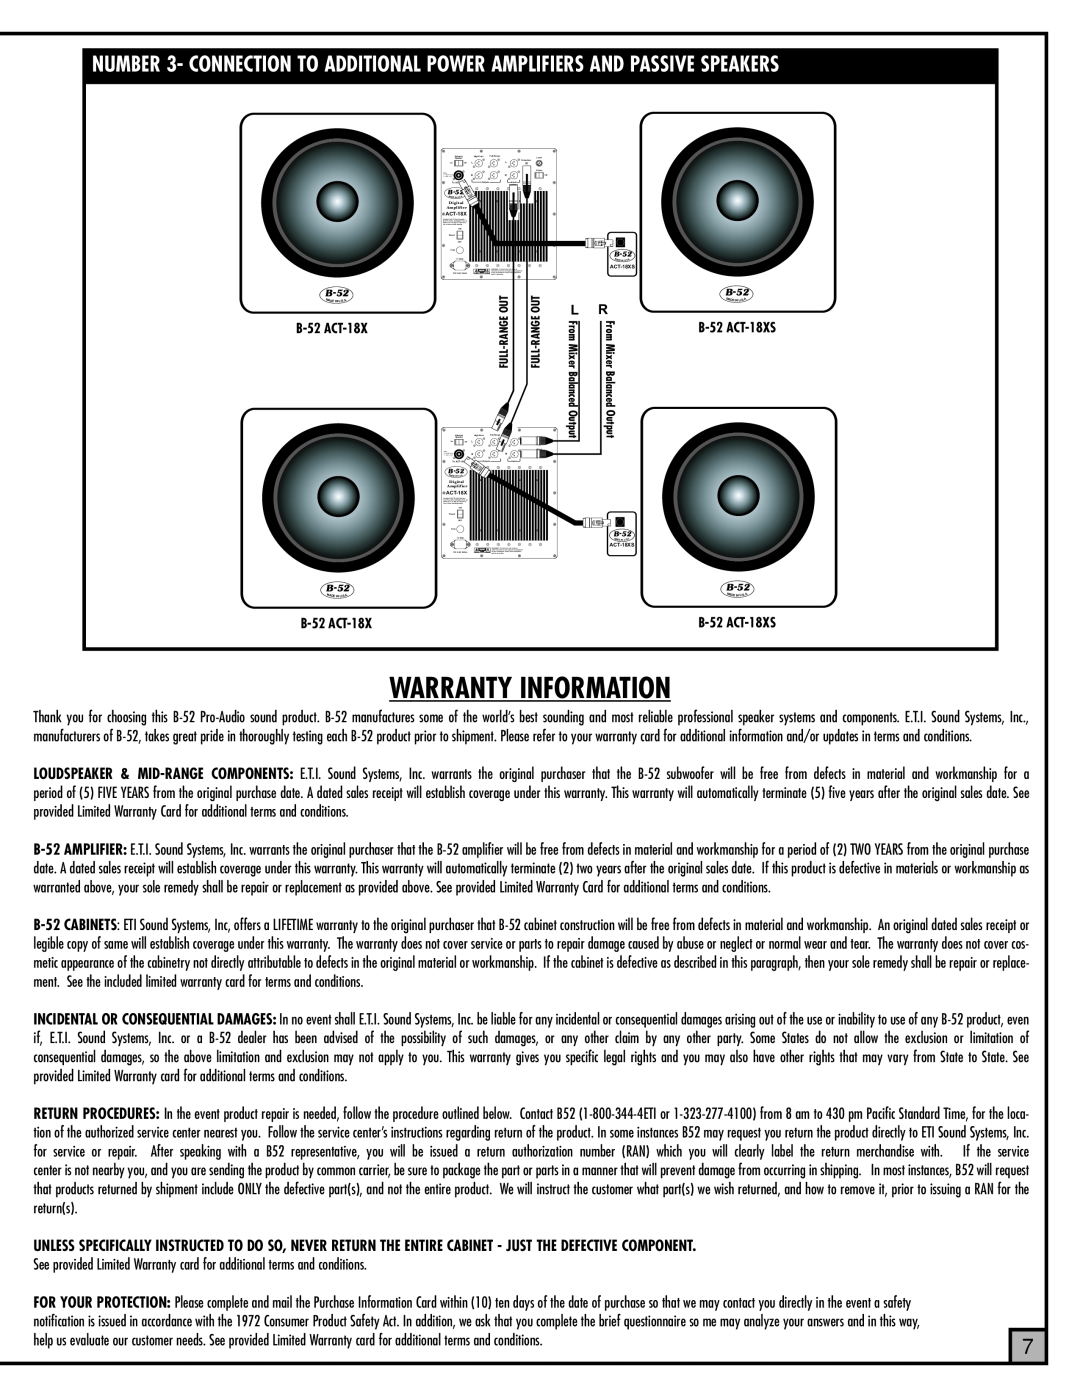 ETI Sound Systems, INC manual Warranty Information, B-52 ACT-18XS 